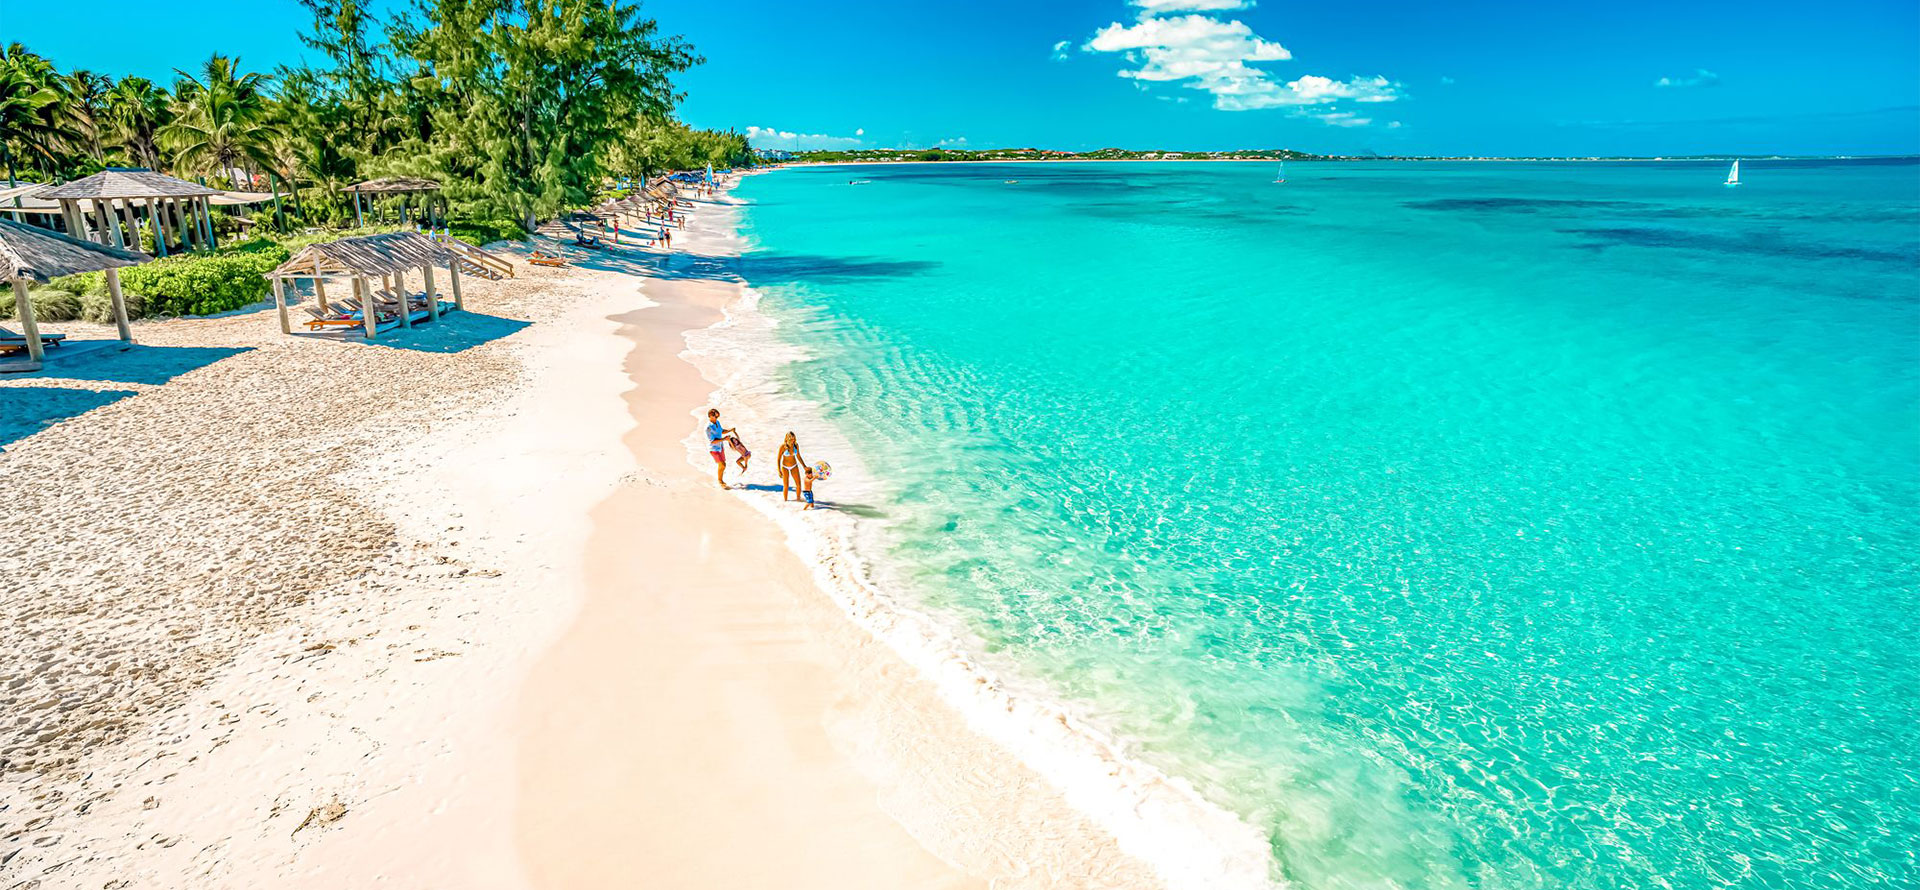 Turks and Caicos honeymoon beach photo.